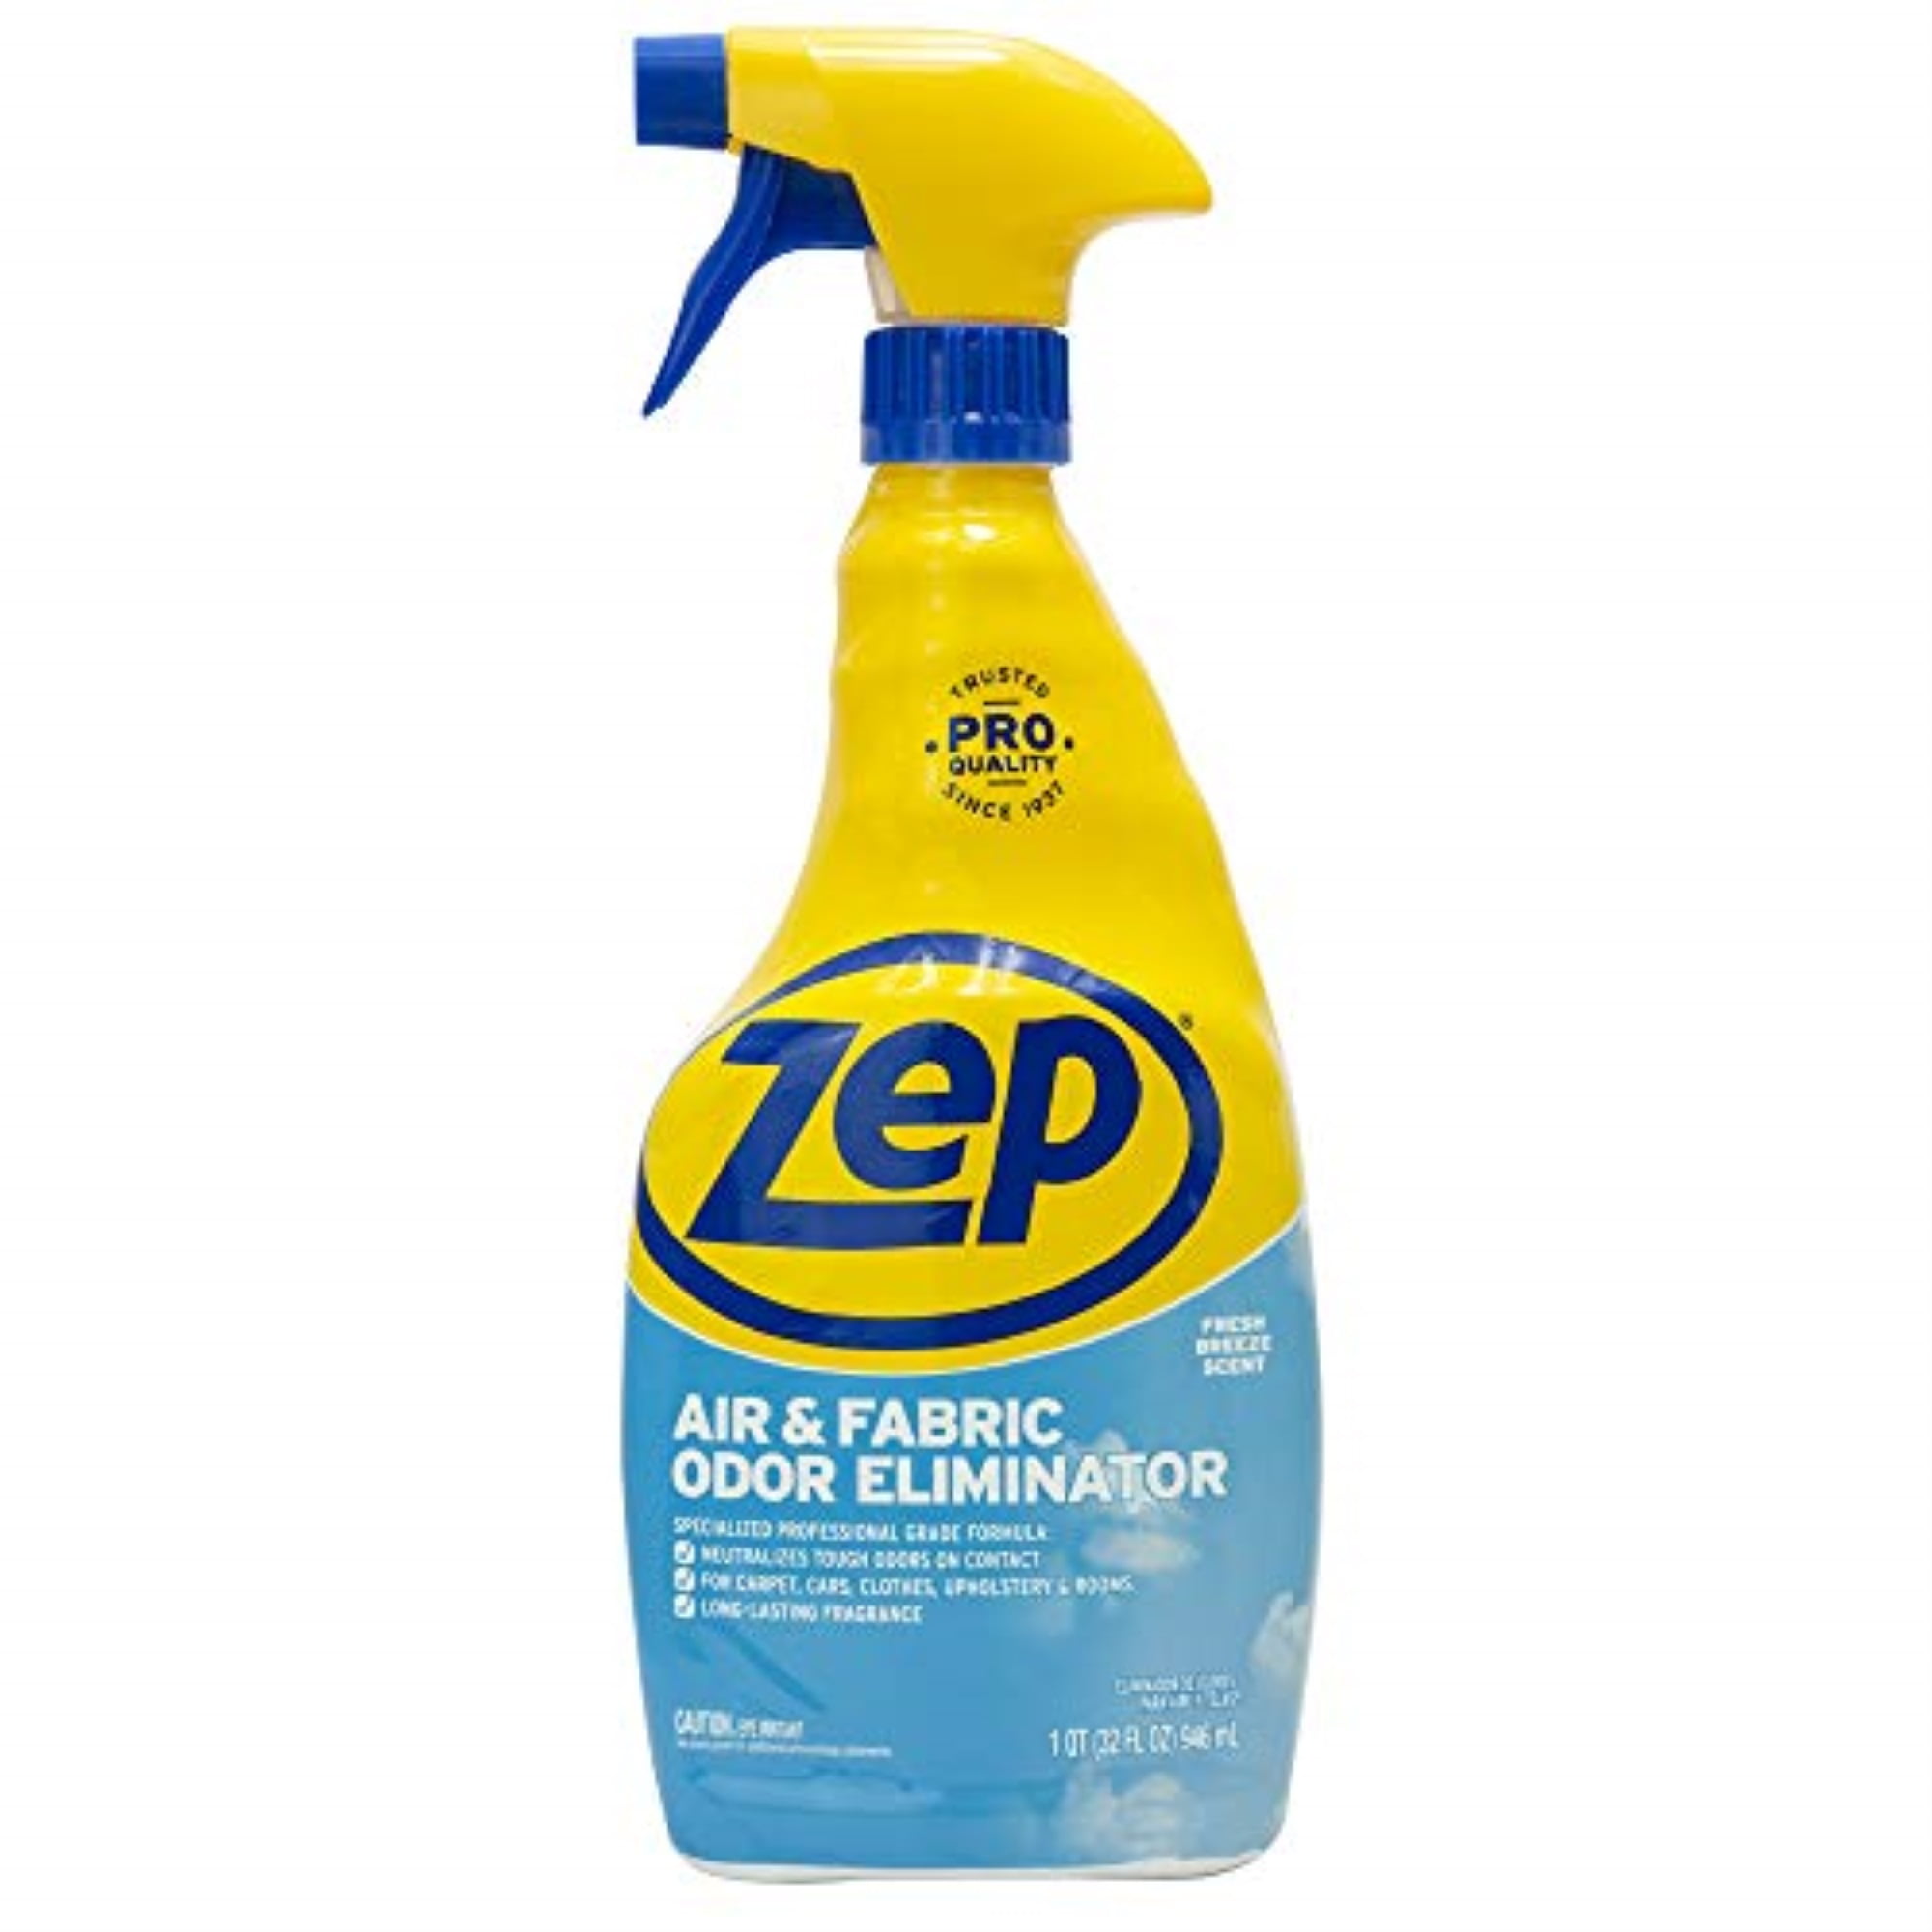 Zep Air & Fabric Odor Eliminator